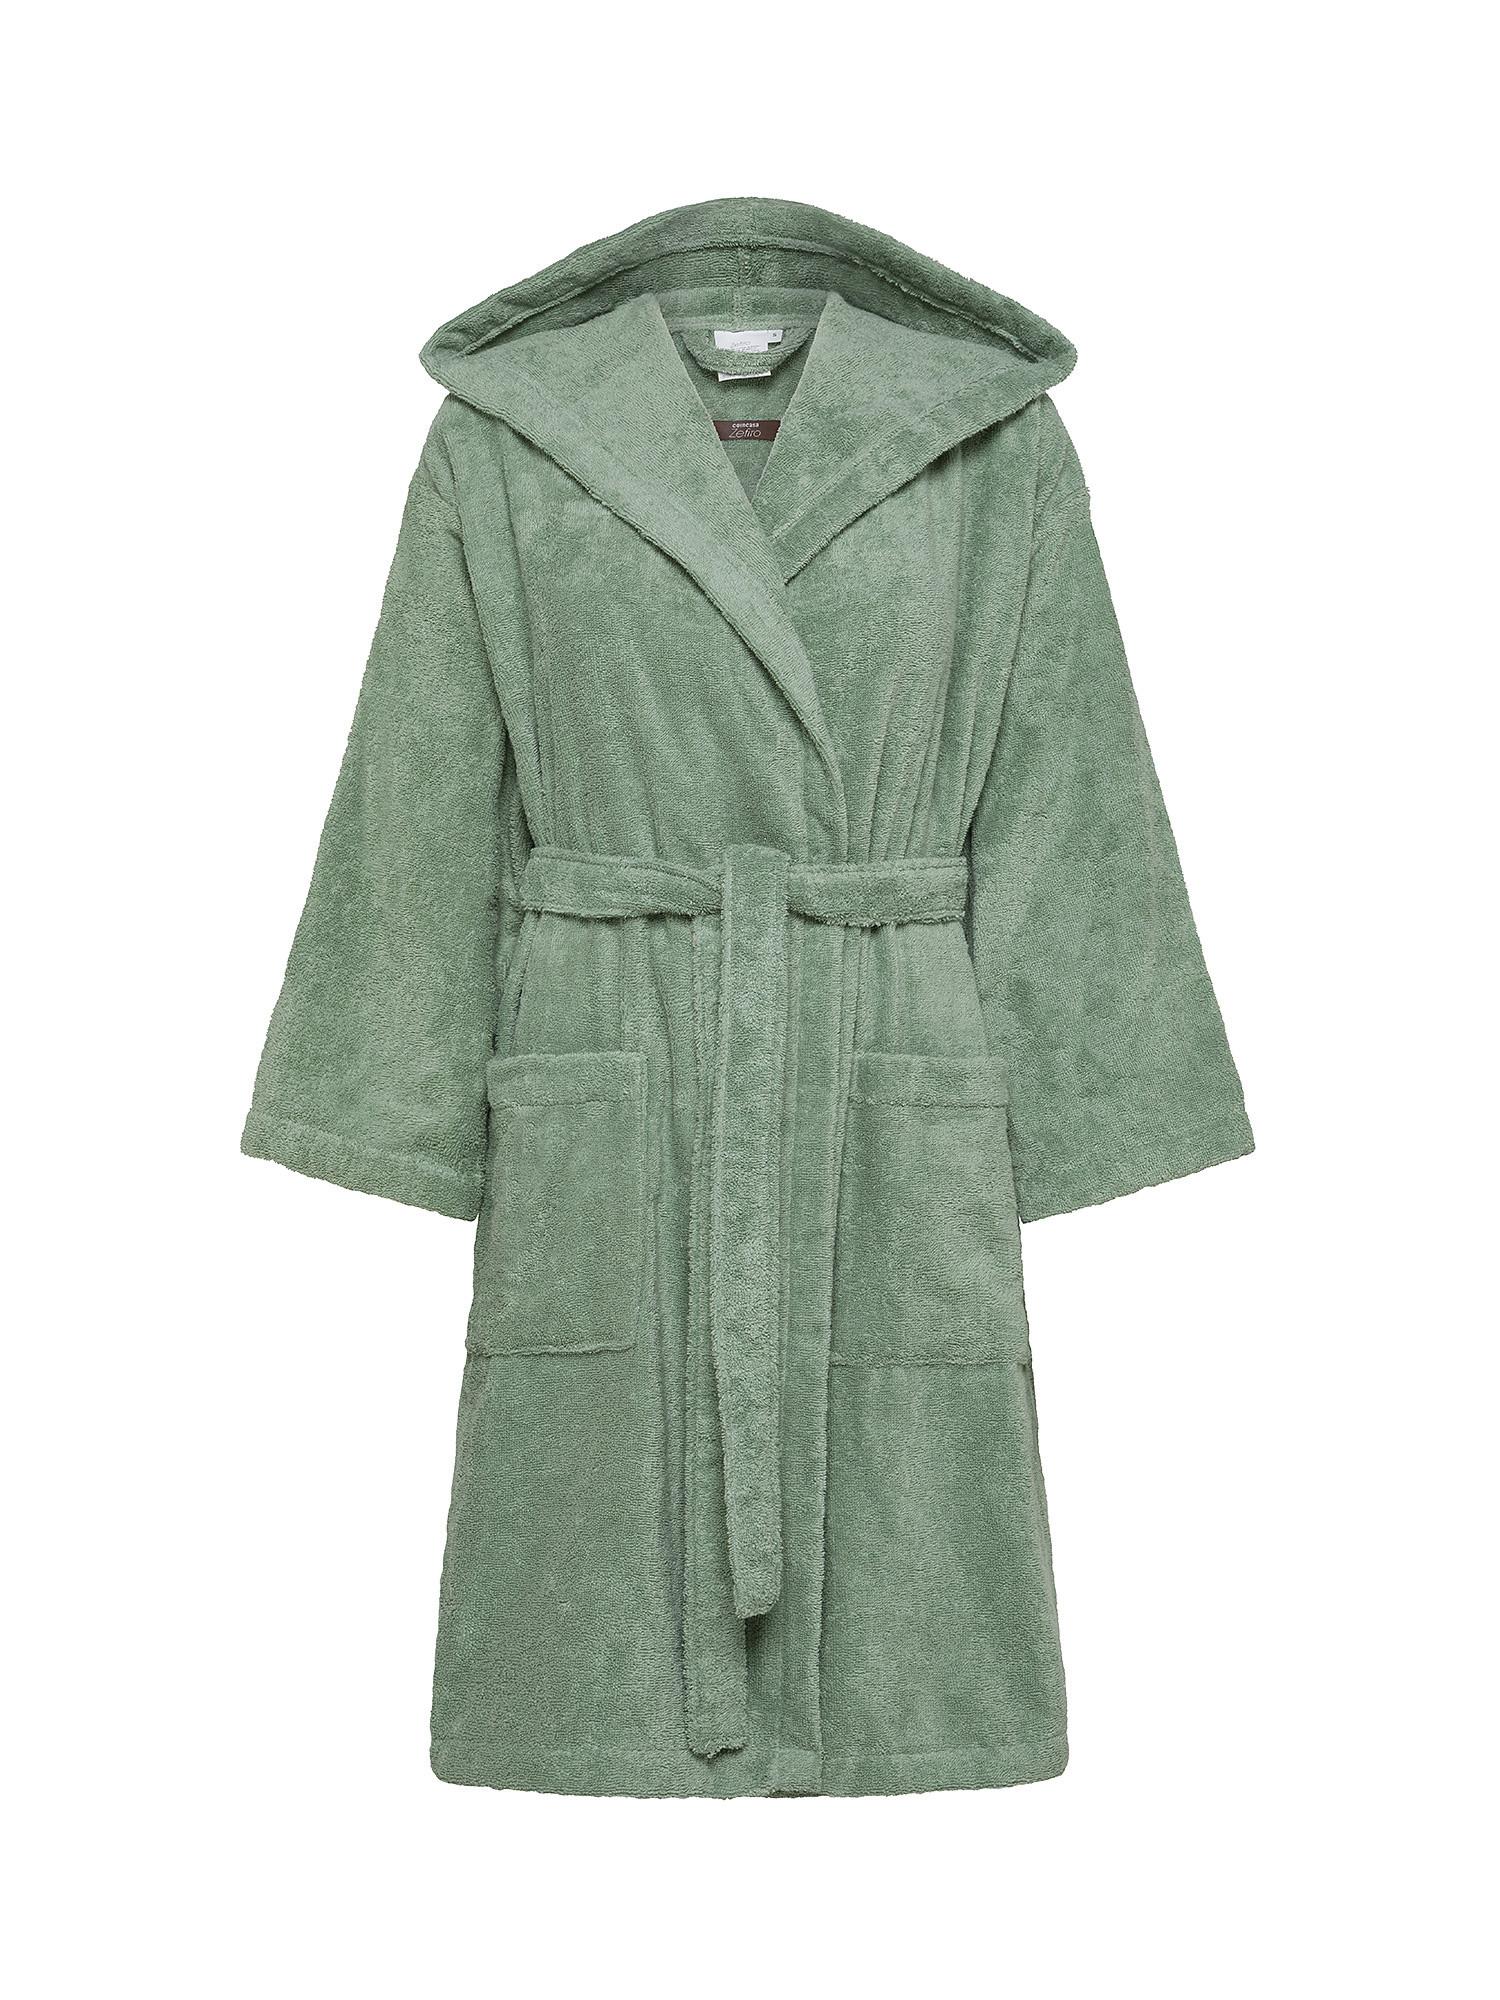 Zefiro solid color 100% cotton bathrobe, Sage Green, large image number 0